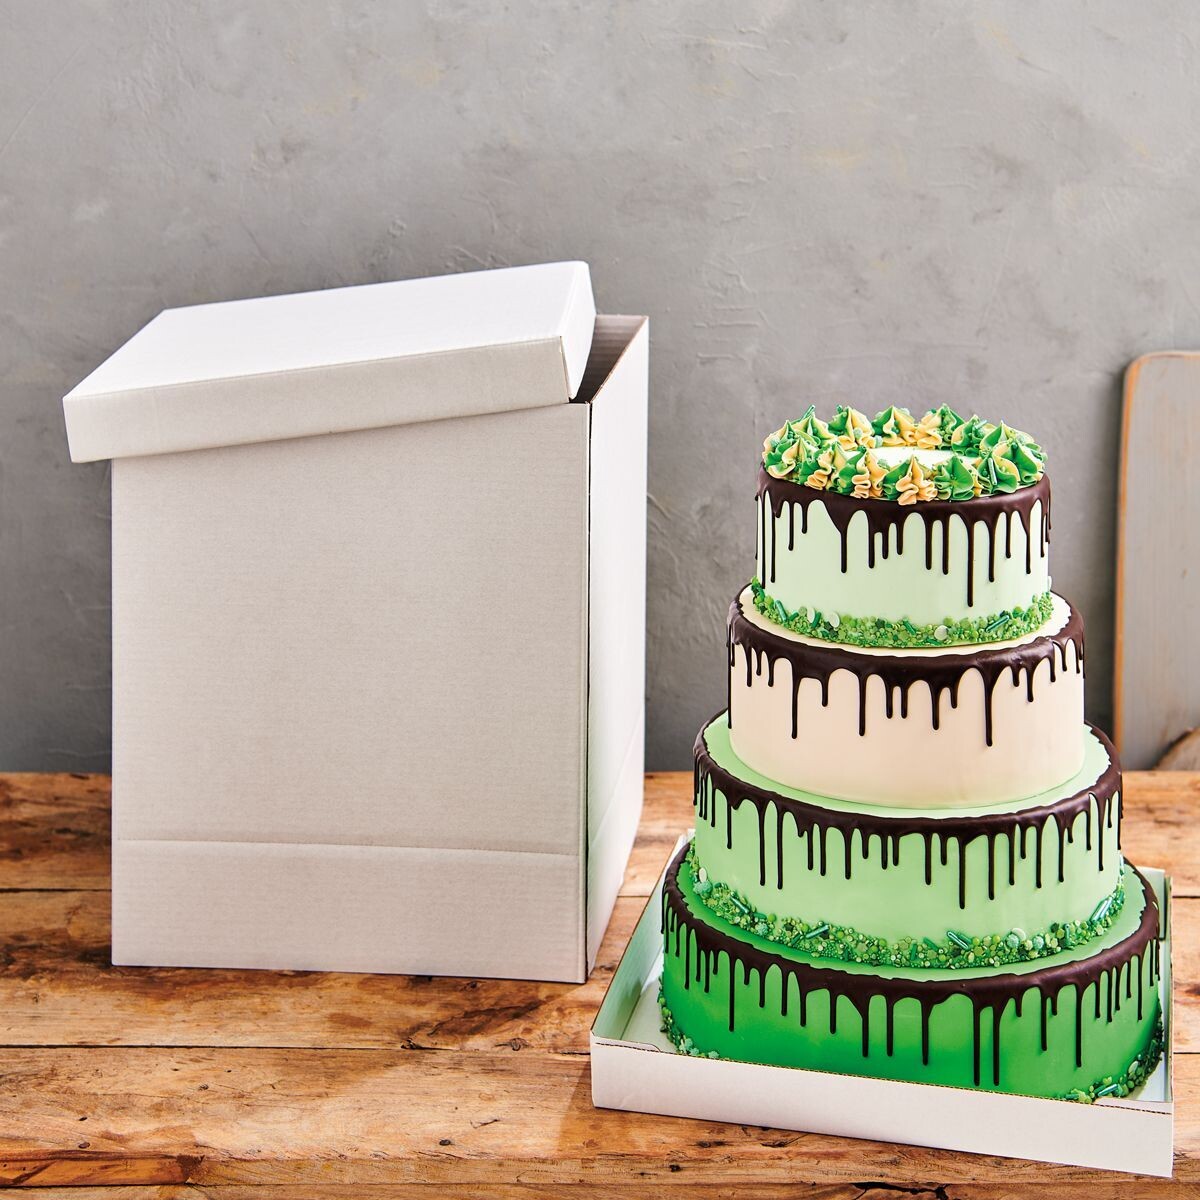 FunCakes Cake Box White 52x52x70εκ - Ψηλό Κουτί 52εκ με Ύψος 70εκ ΜΟΝΟ ΓΙΑ ΠΑΡΑΛΑΒΗ ΑΠΟ ΤΟ CAKES BY SAMANTHA